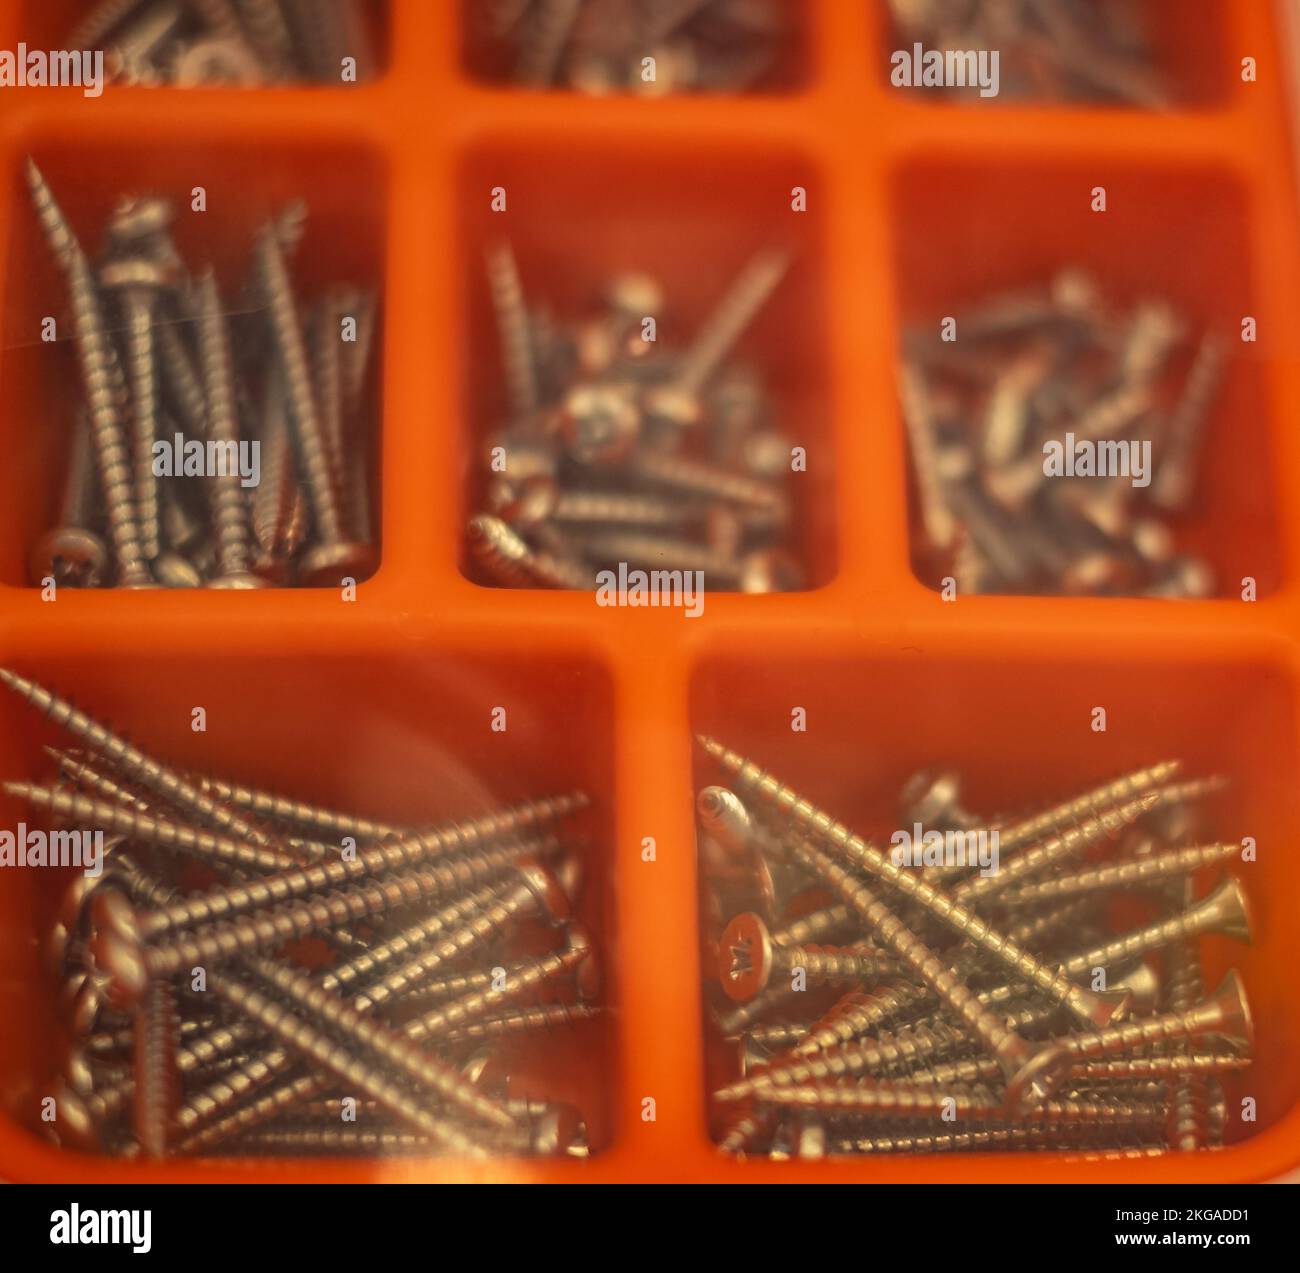 Plastic transparent organizer with screws, dowels, drills. Screws and nails in orange plastic box. Plastic organizer box with wood screws and nails. A Stock Photo